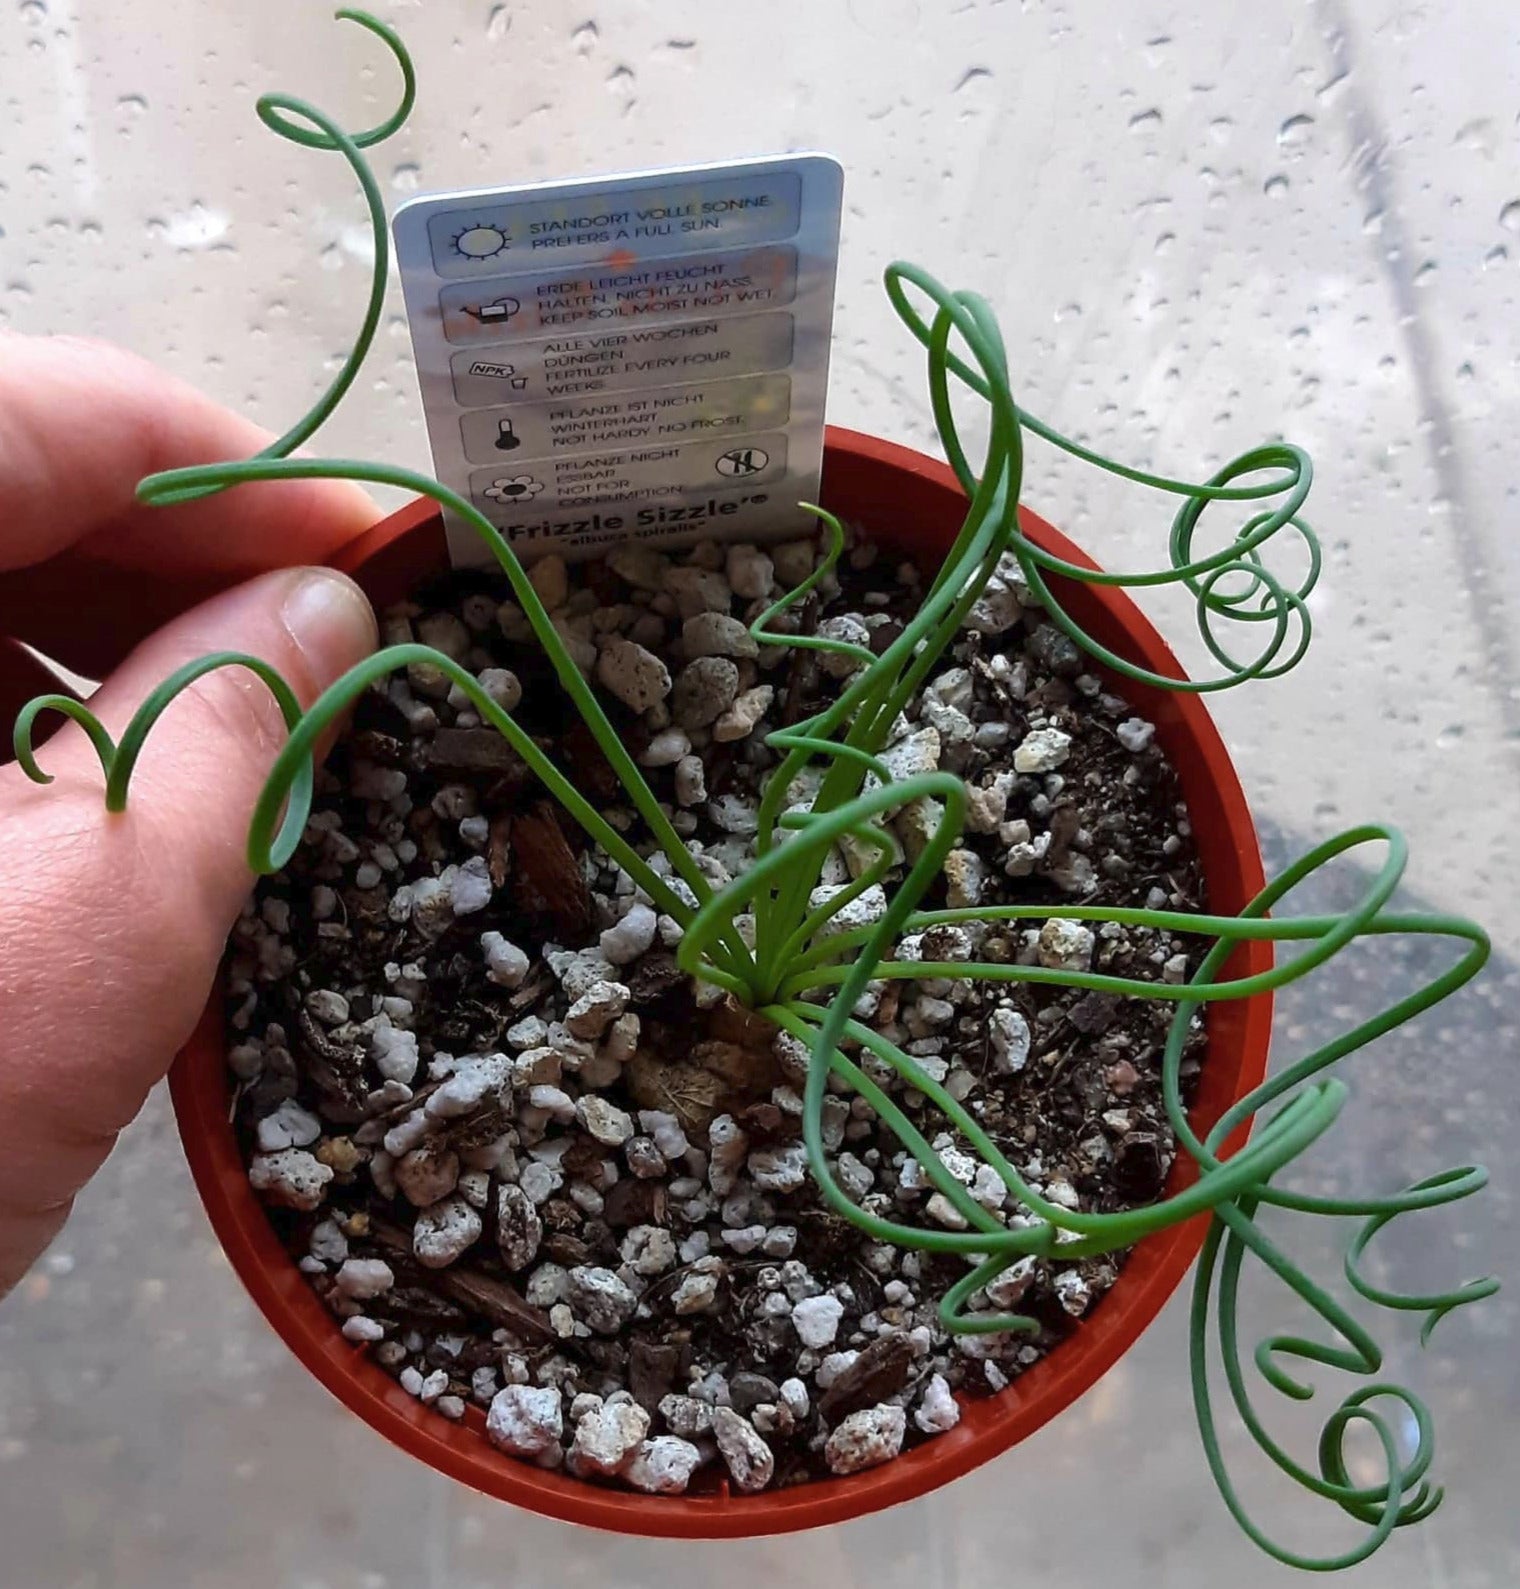 Albuca Spiralis aka Frizzle Sizzle 4 Inch Live Succulent